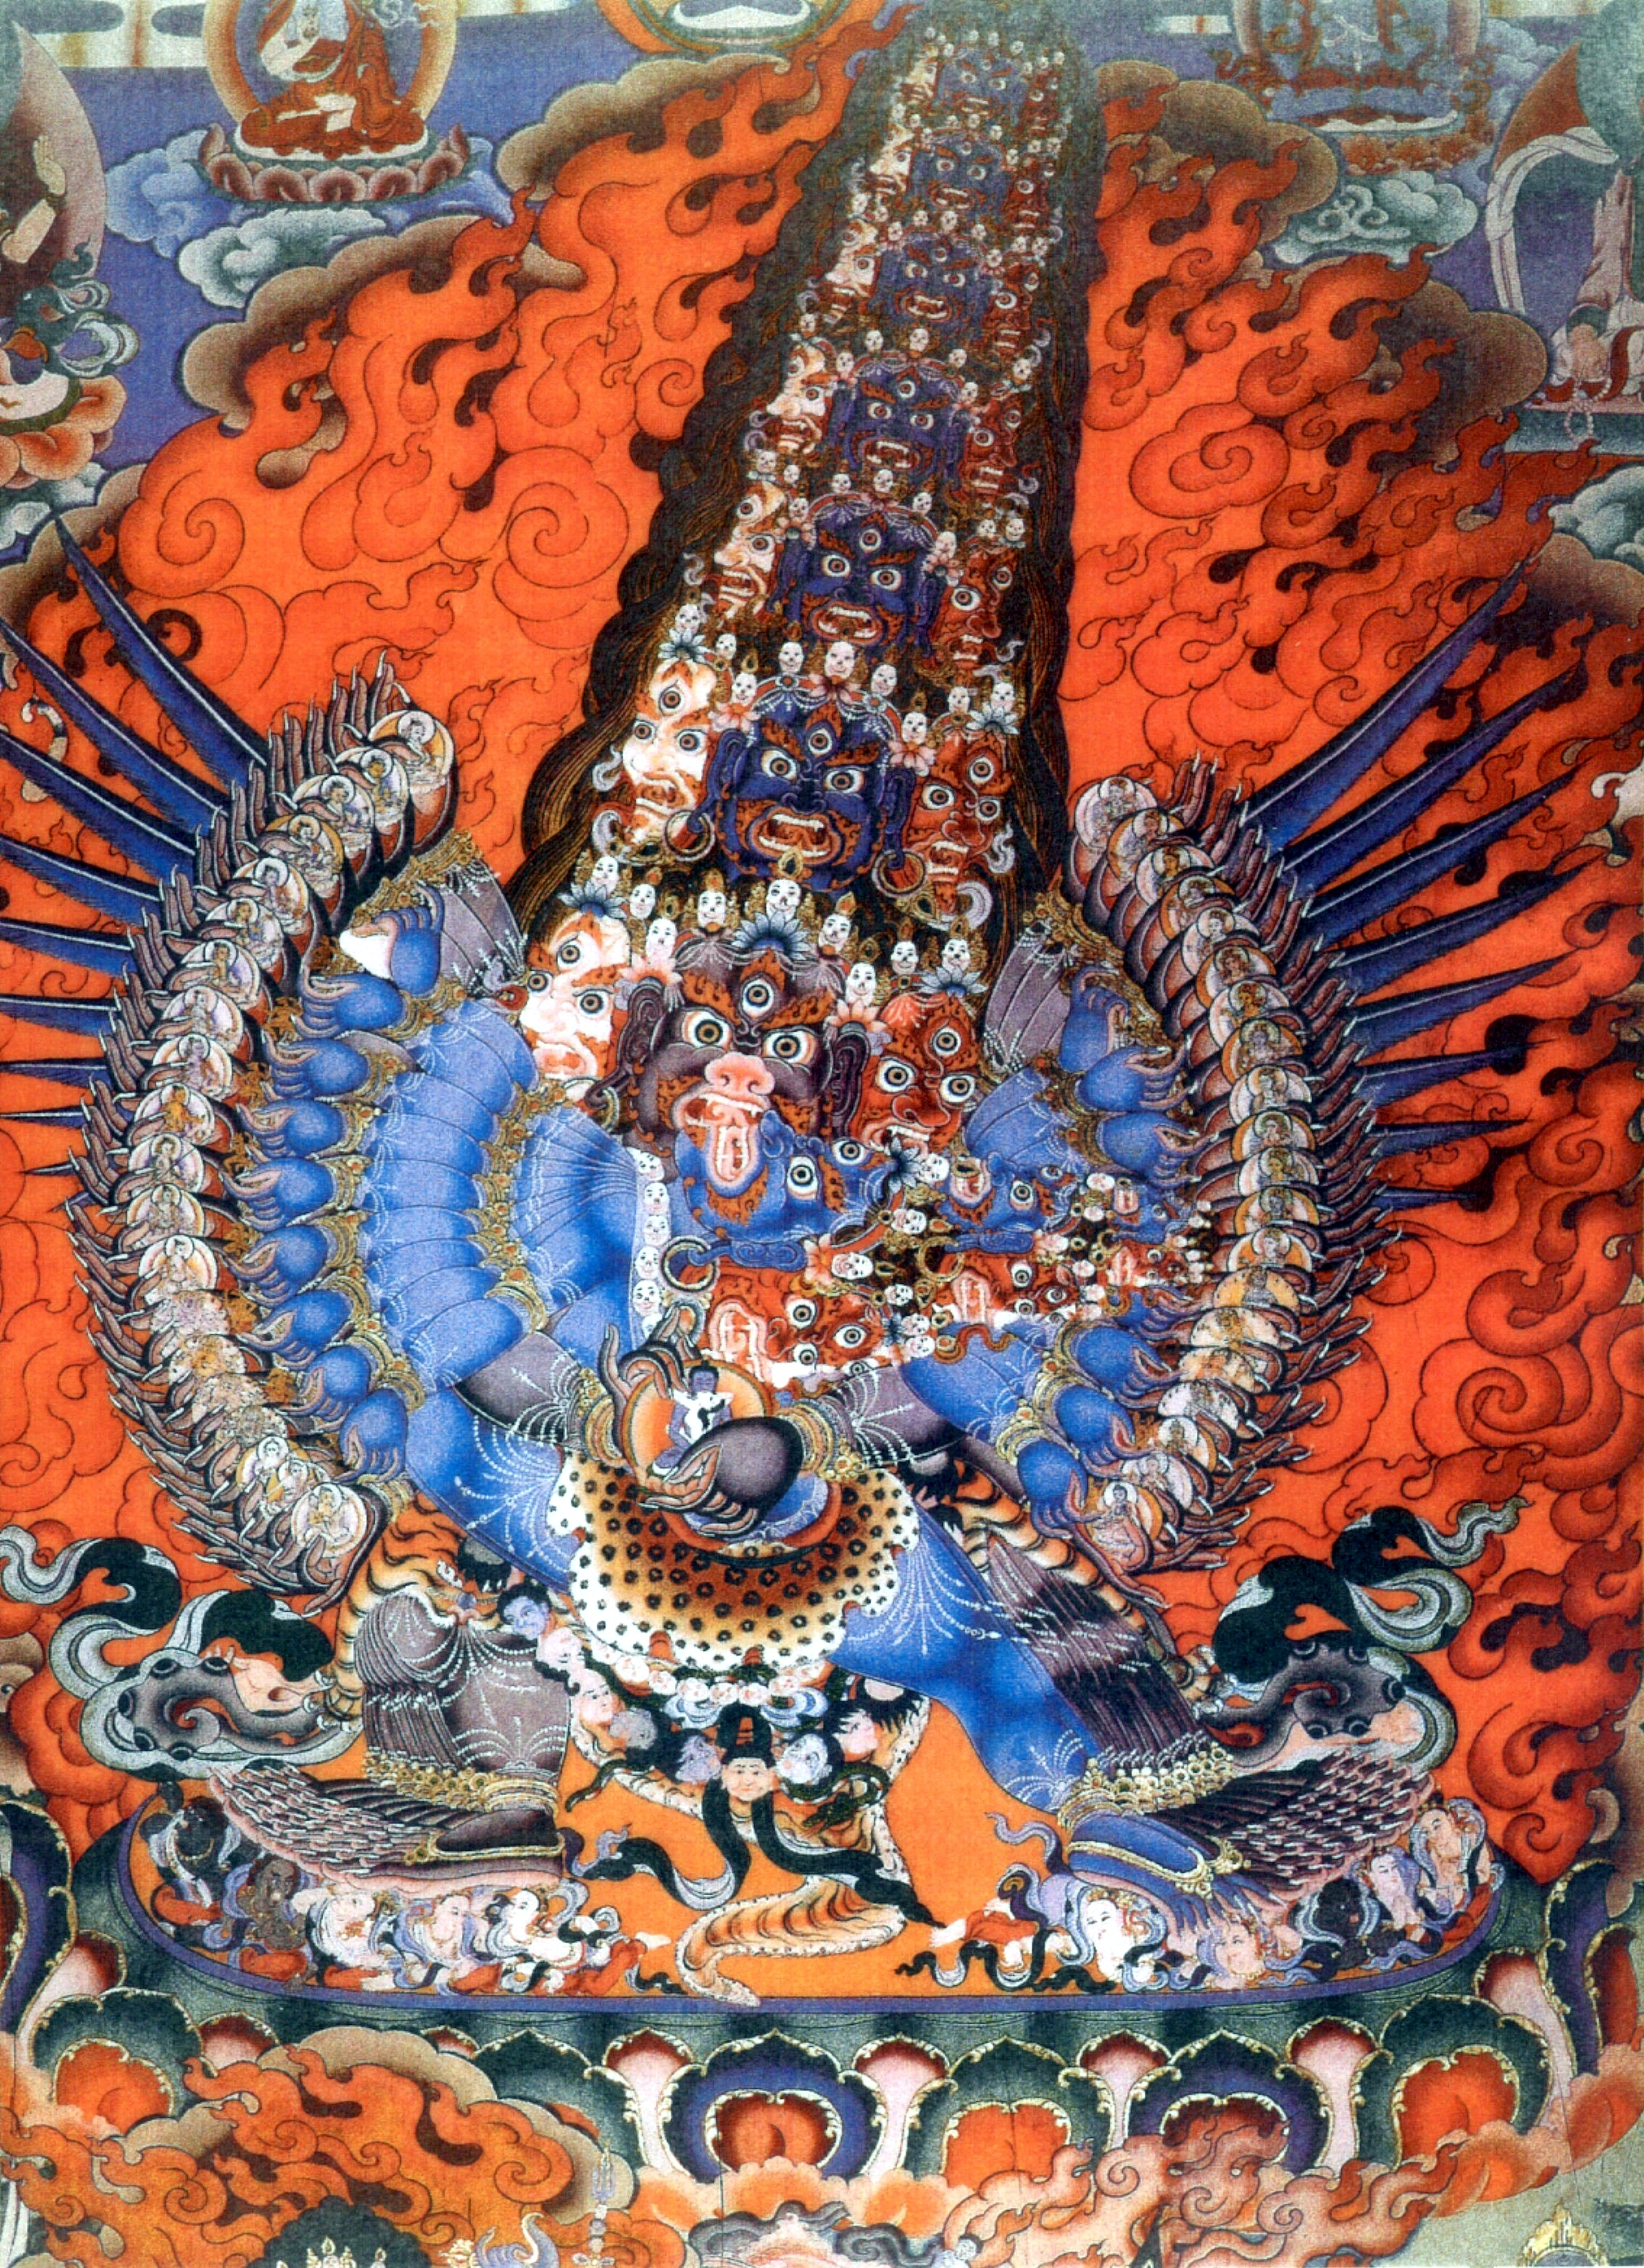 Rāhula, the son Siddhartha Gautama, as rendered in Tibetan Buddhism